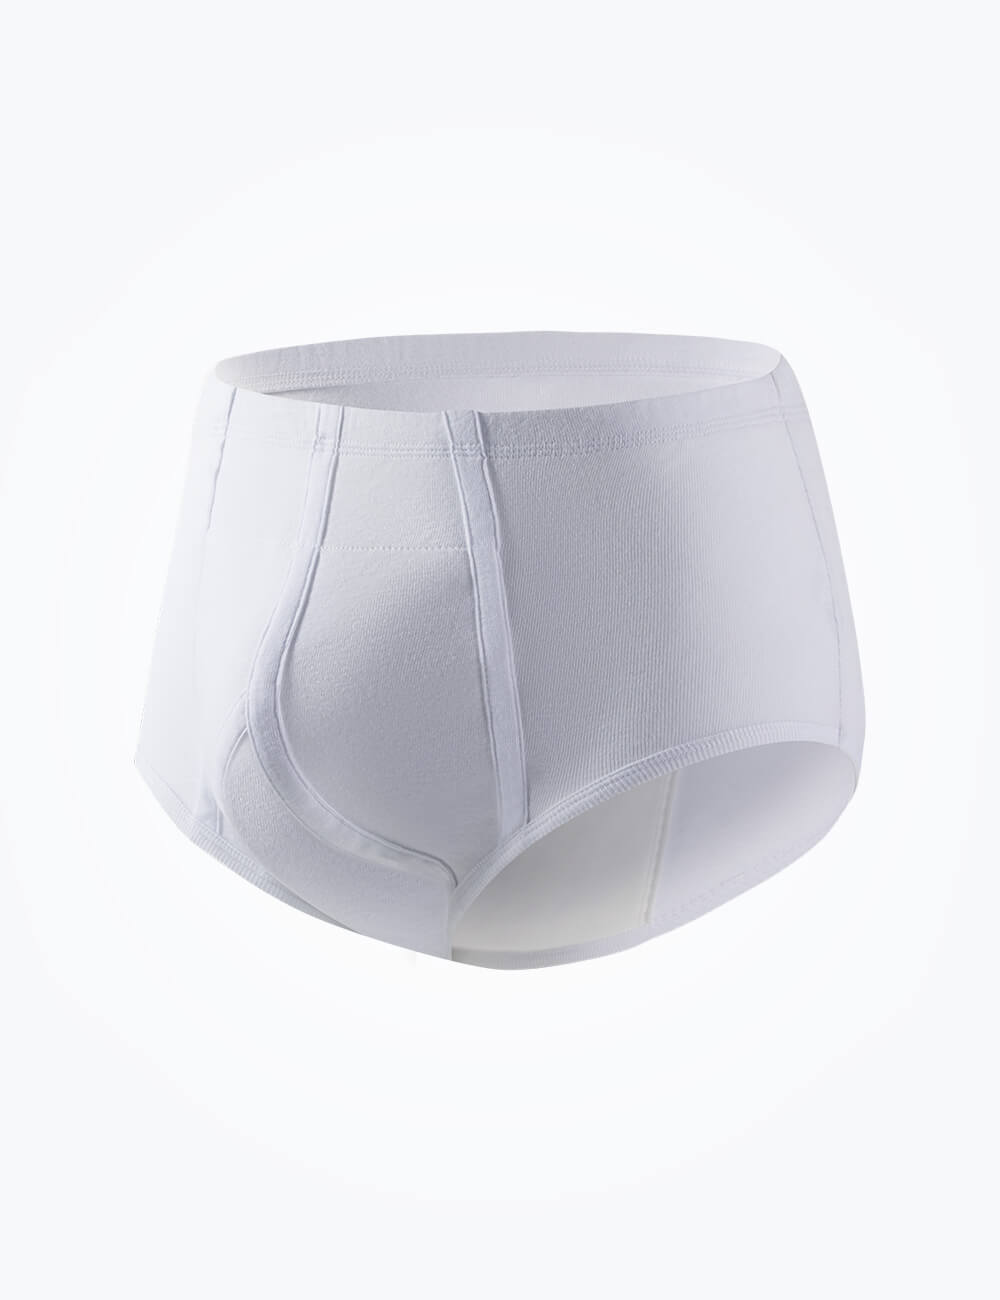 Assurance Incontinence Disposable Underwear Men Size Qatar